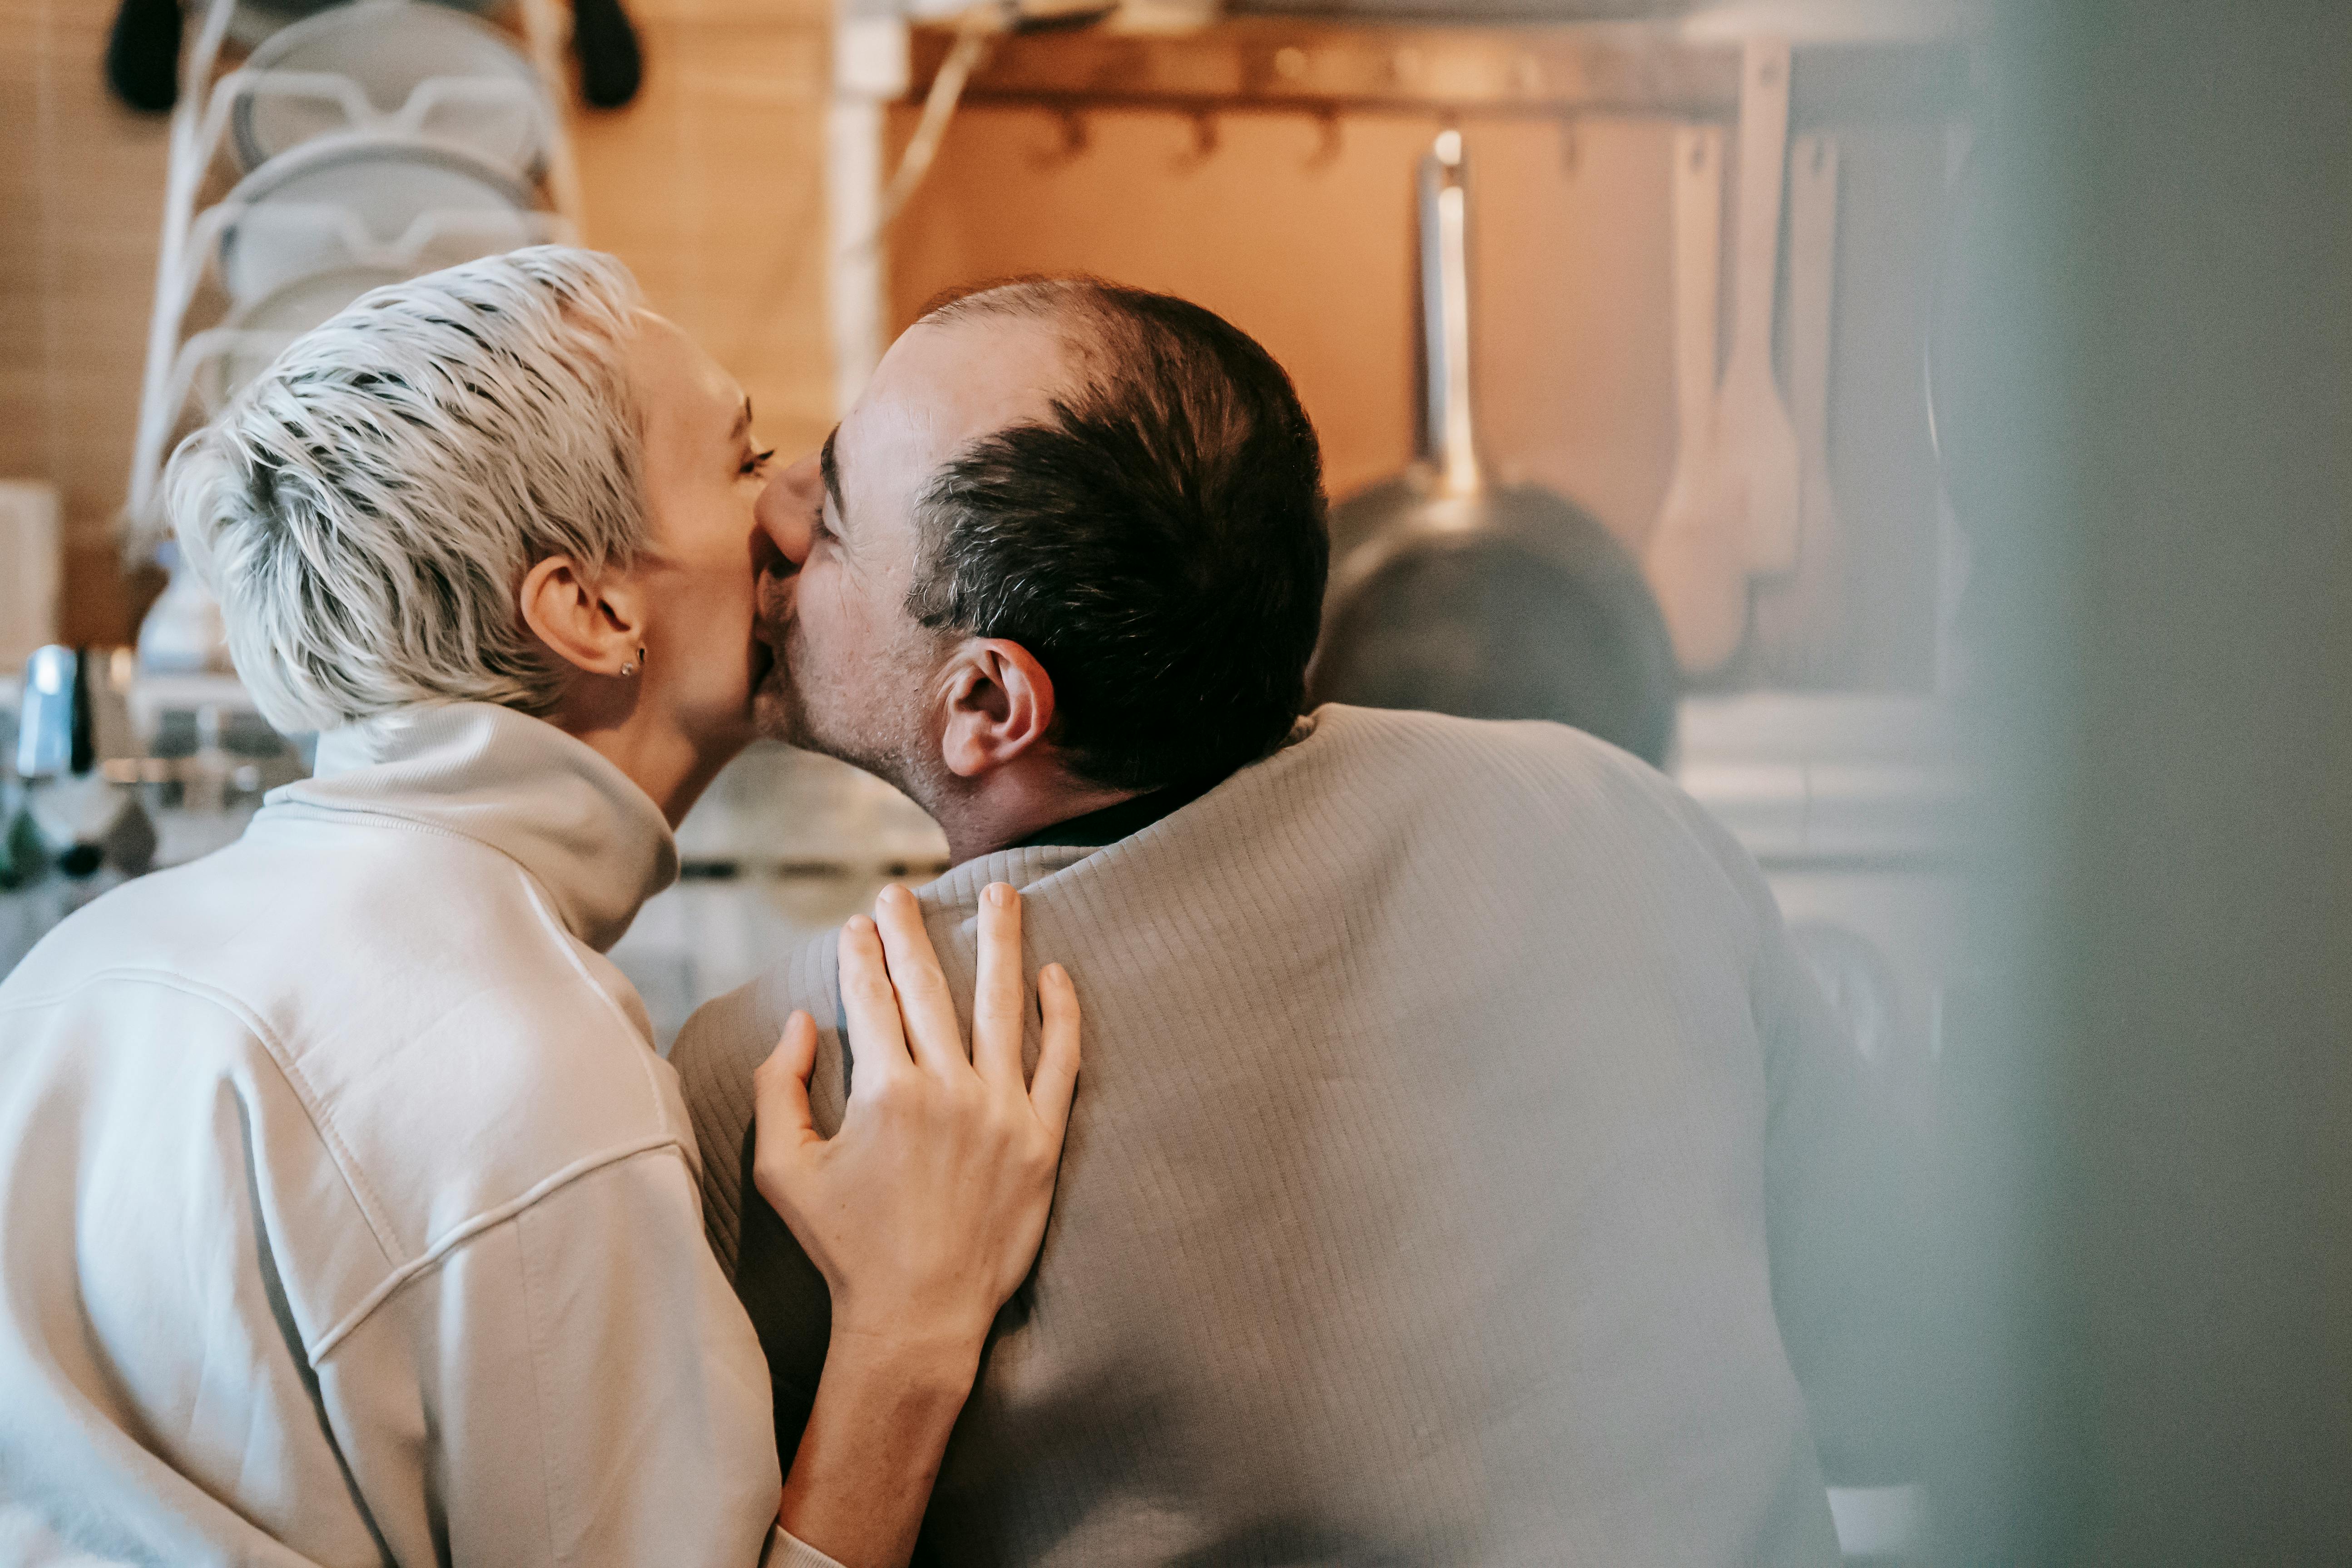 A man kissing a woman | Source: Pexels